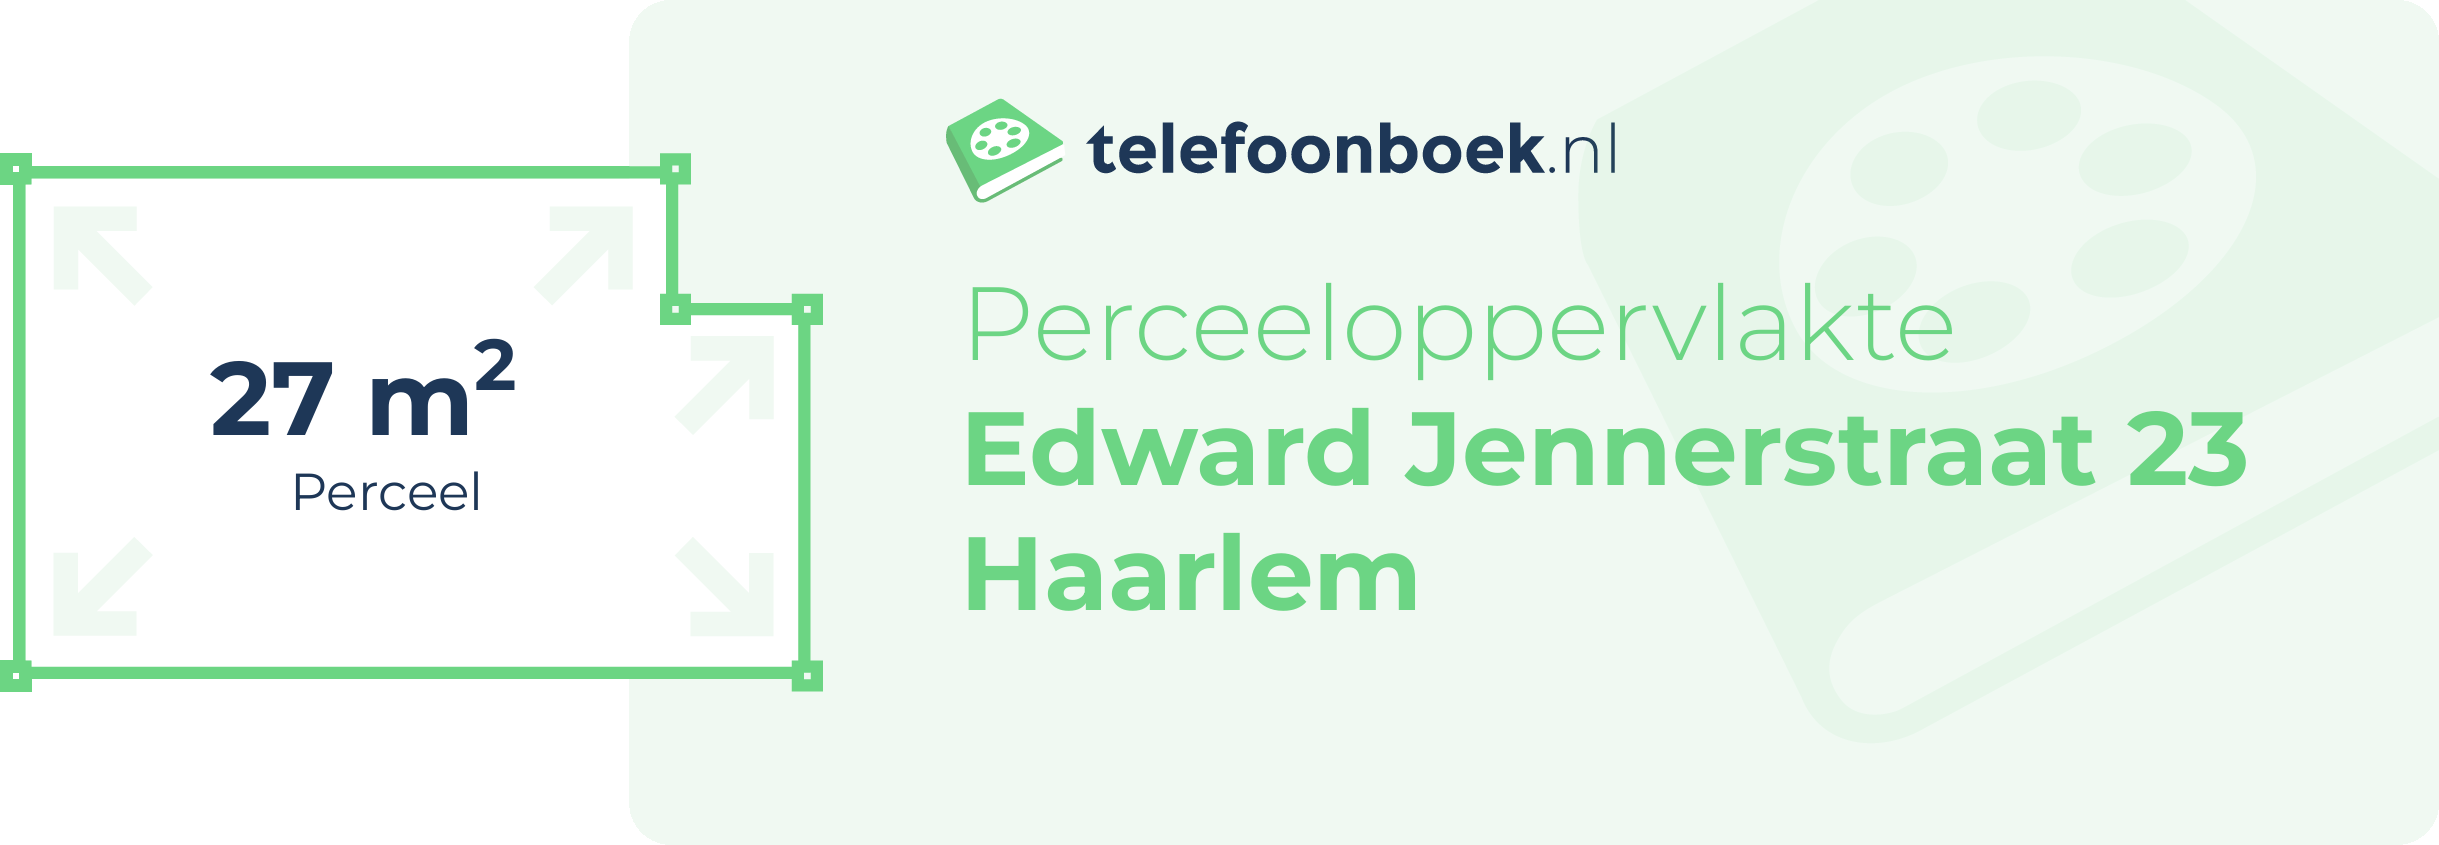 Perceeloppervlakte Edward Jennerstraat 23 Haarlem